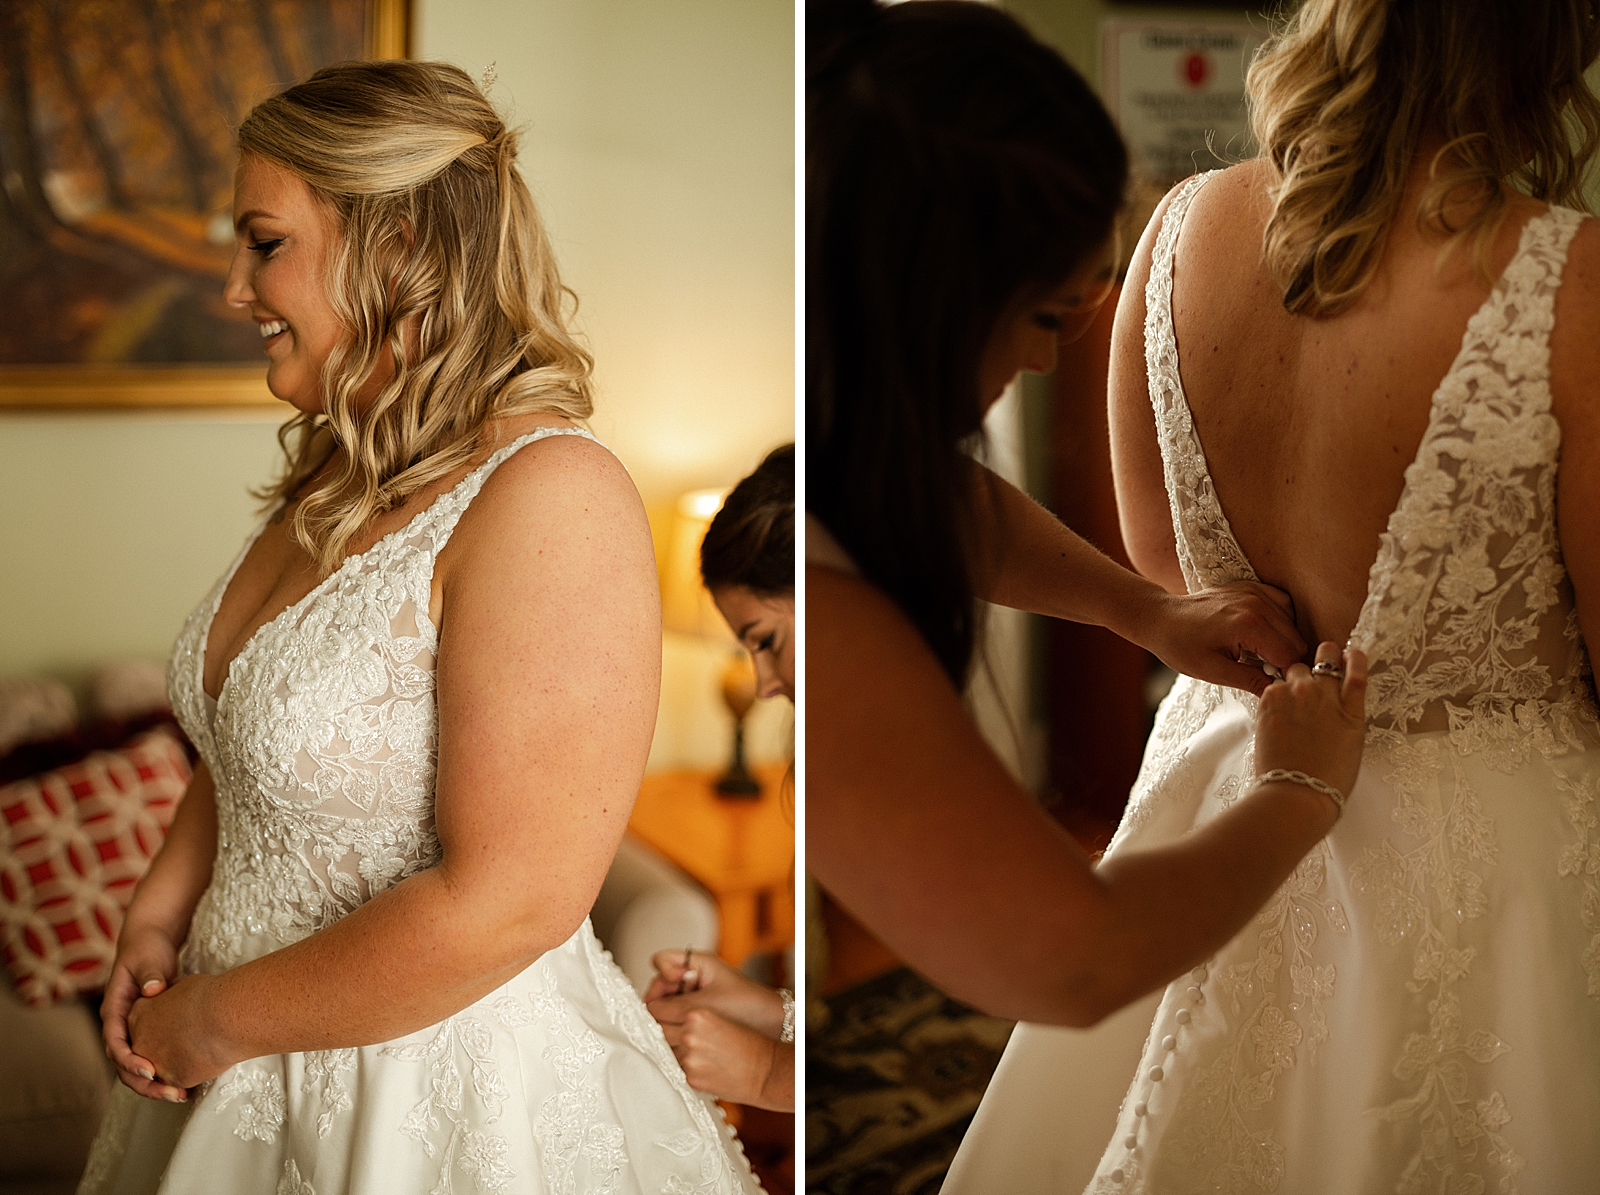 Bride getting help buttoning wedding dress